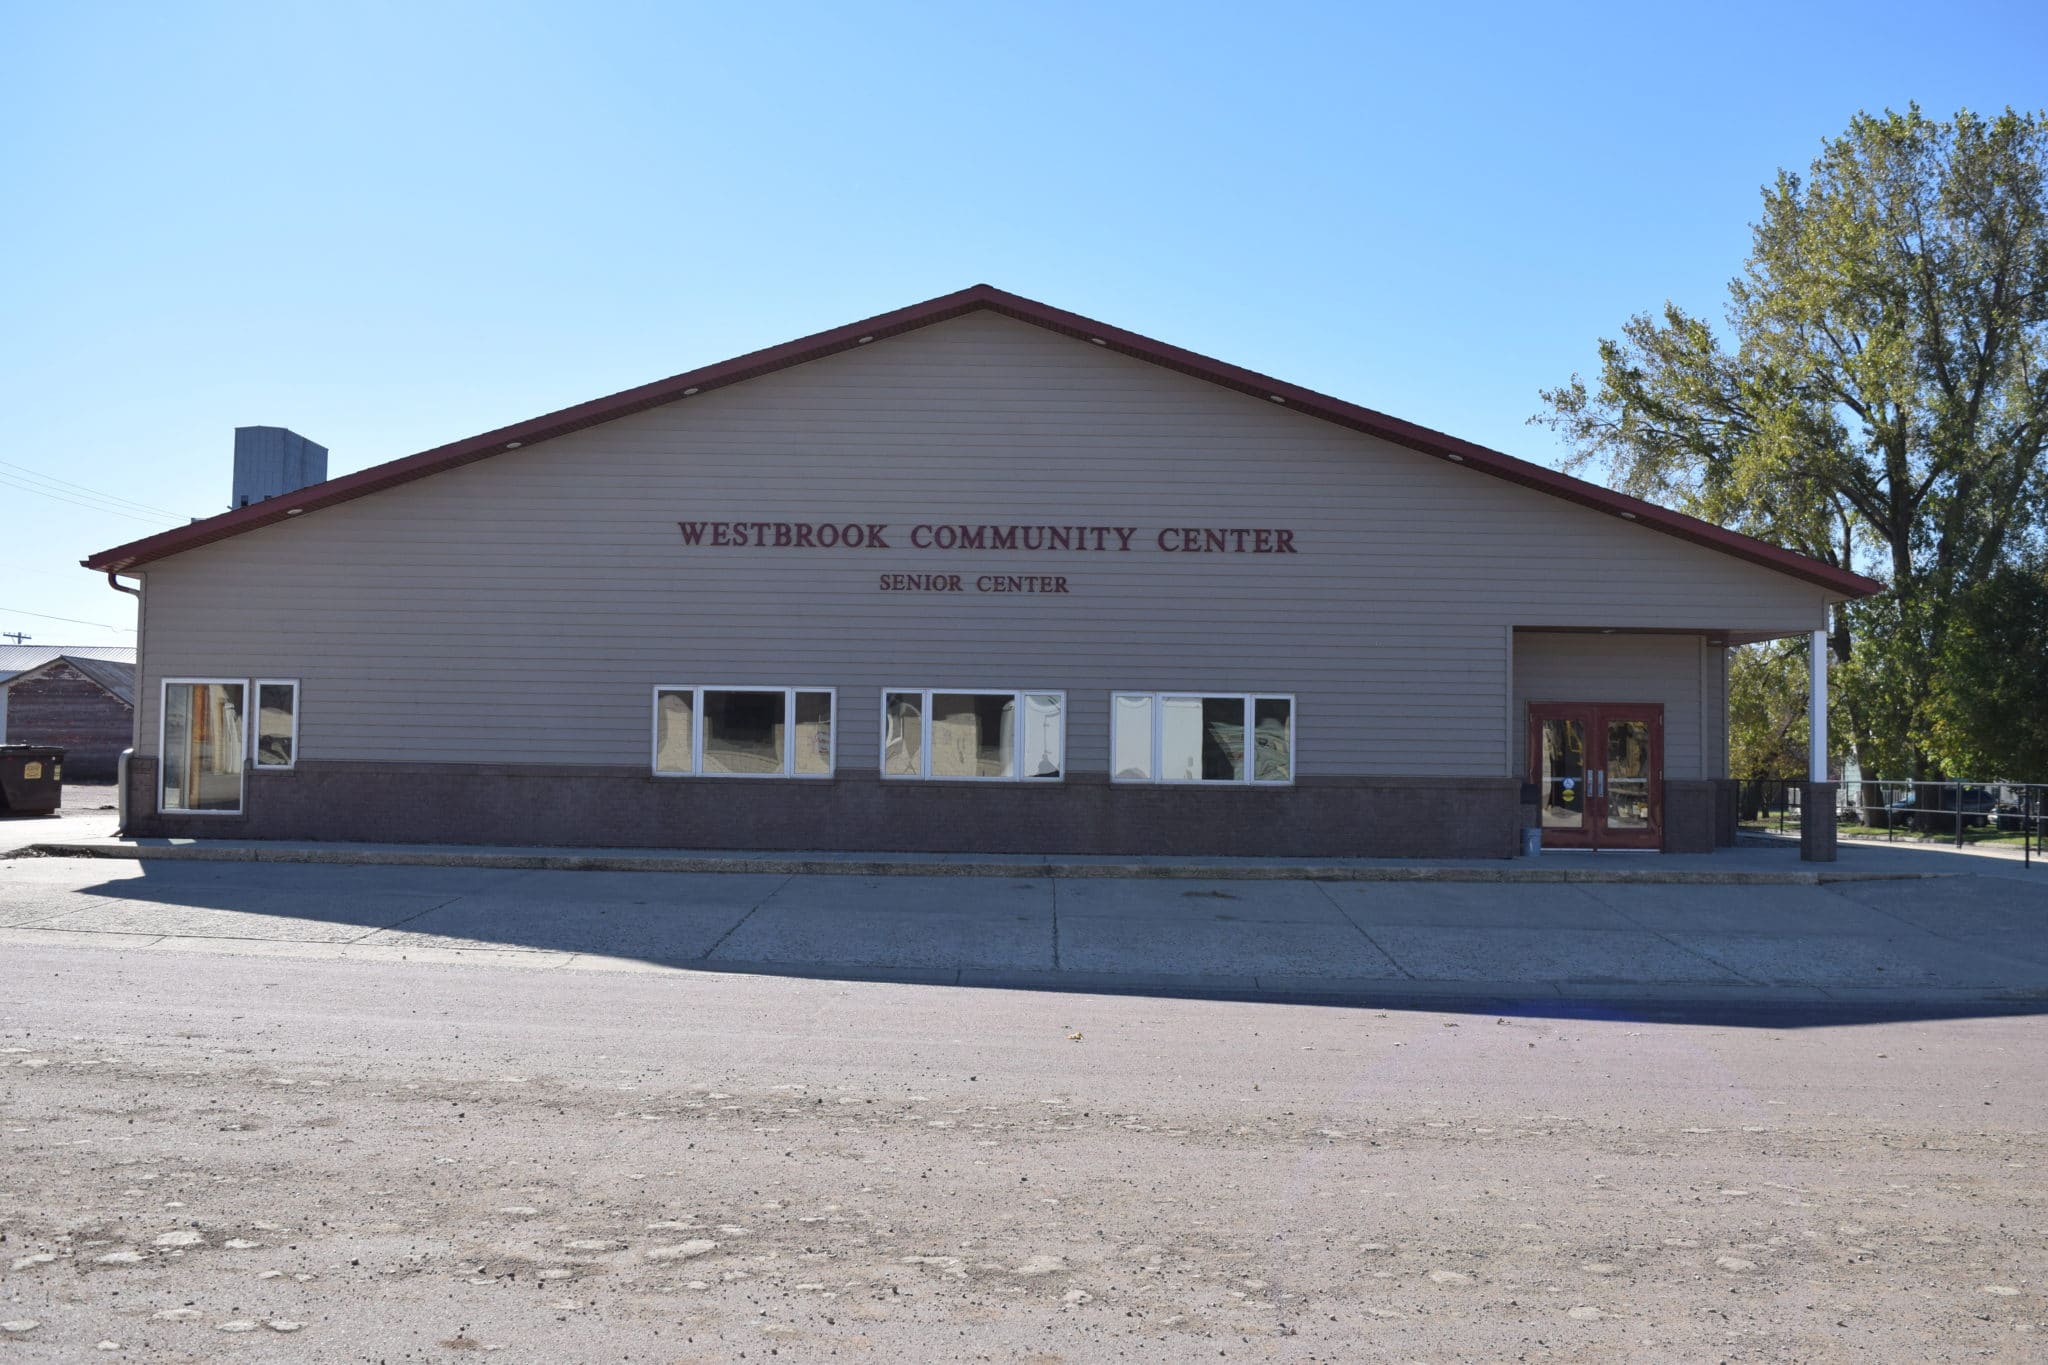 Westbrook Community Center and Senior Center